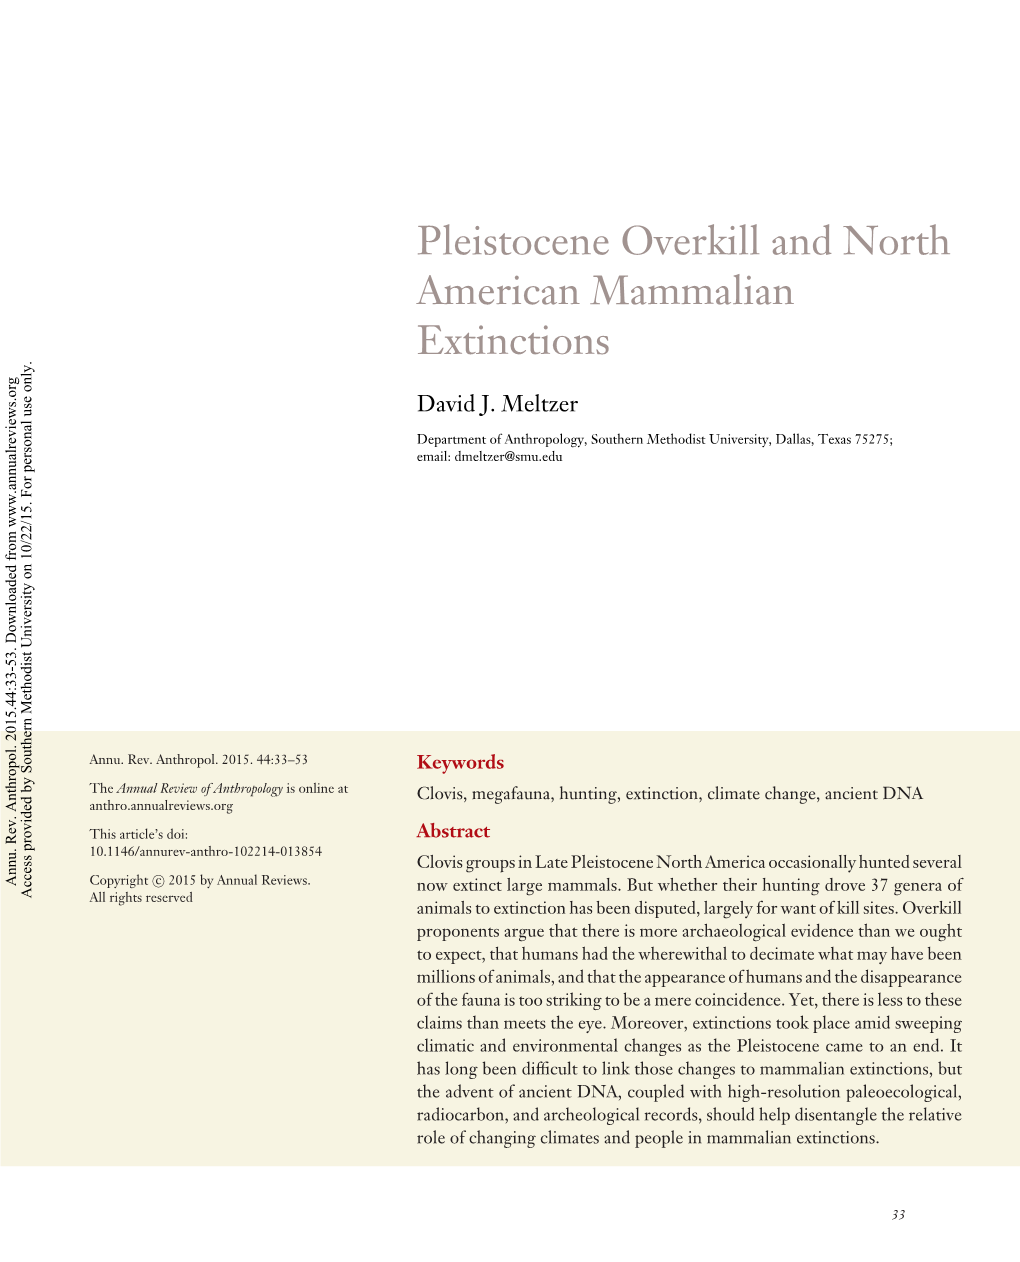 Pleistocene Overkill and North American Mammalian Extinctions